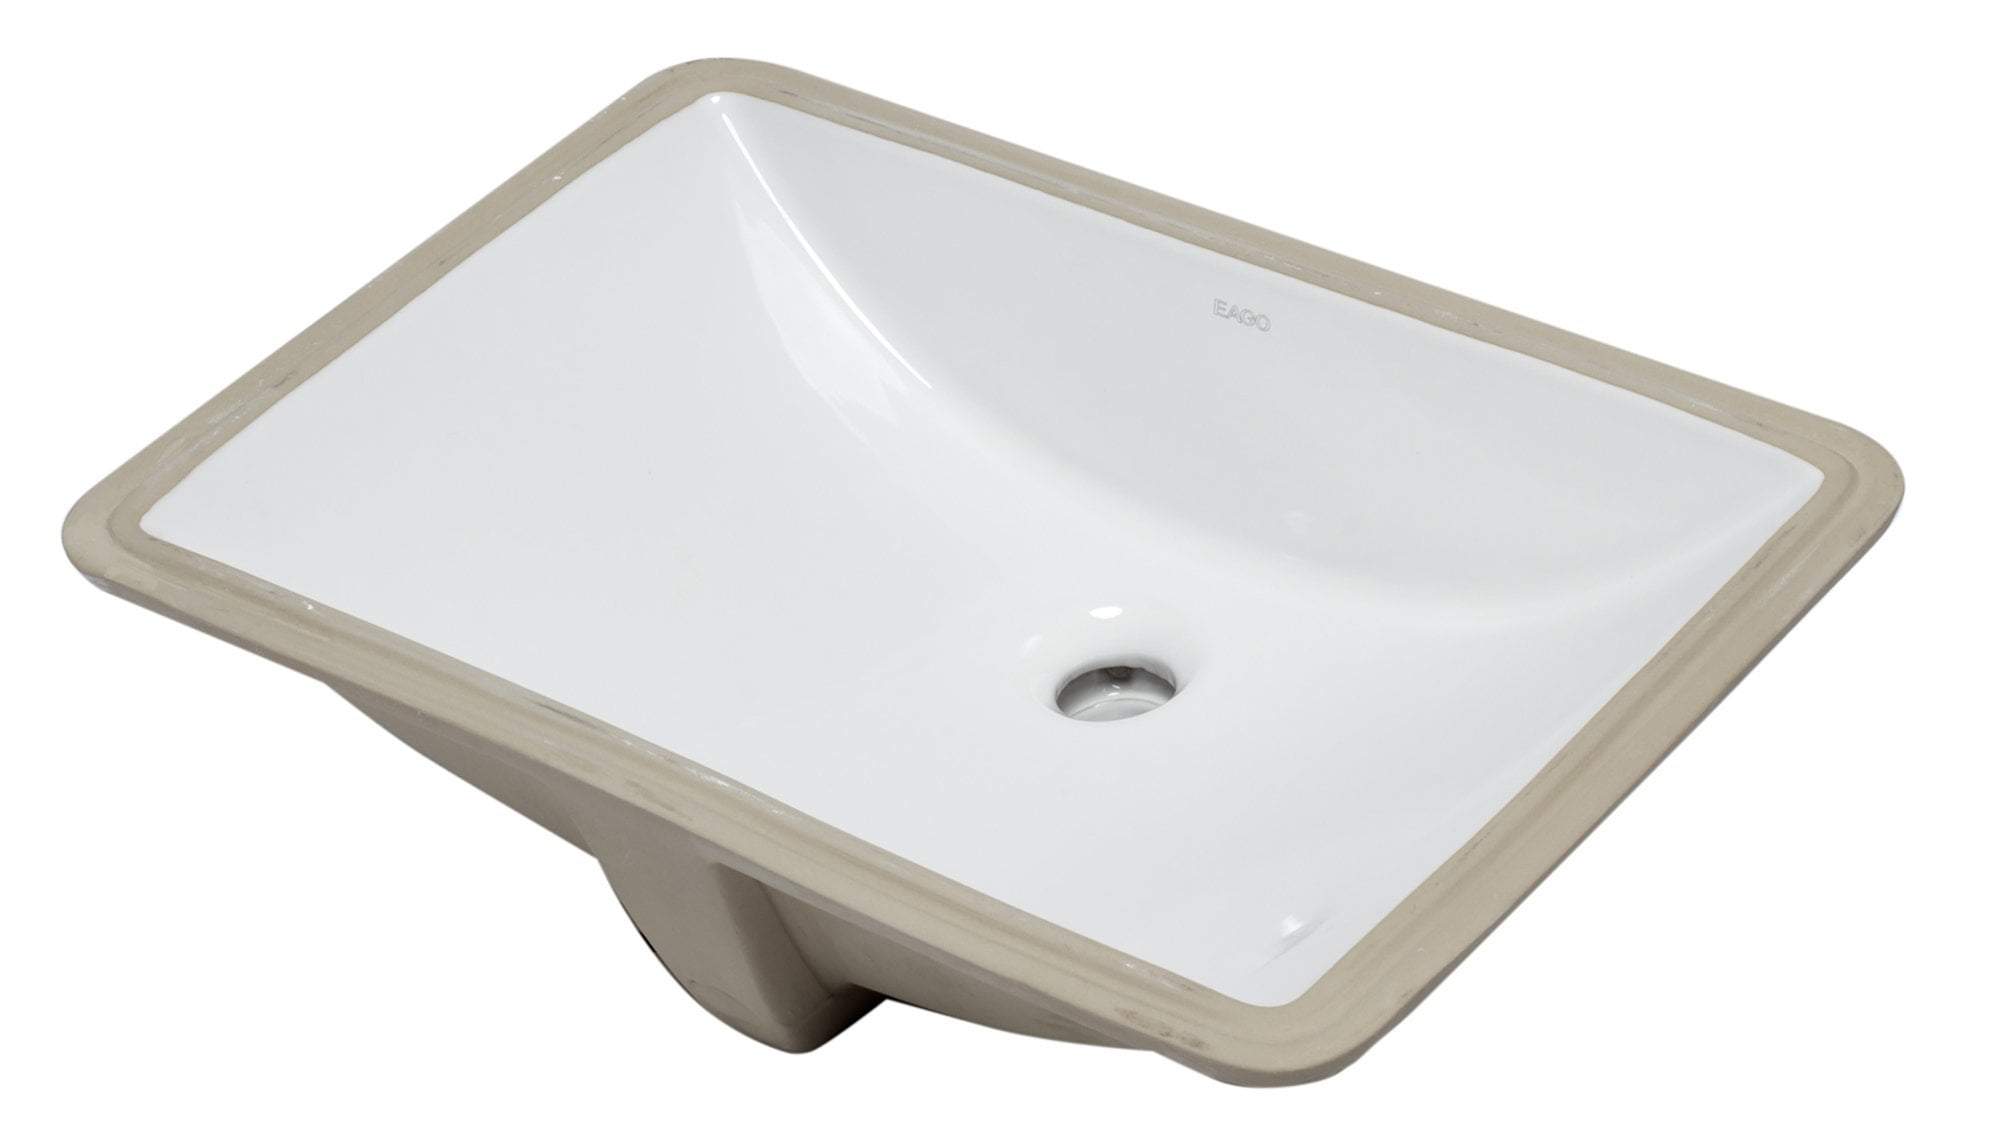 Ipt Sink Company Rectangular Glazed Ceramic Undermount Bathroom